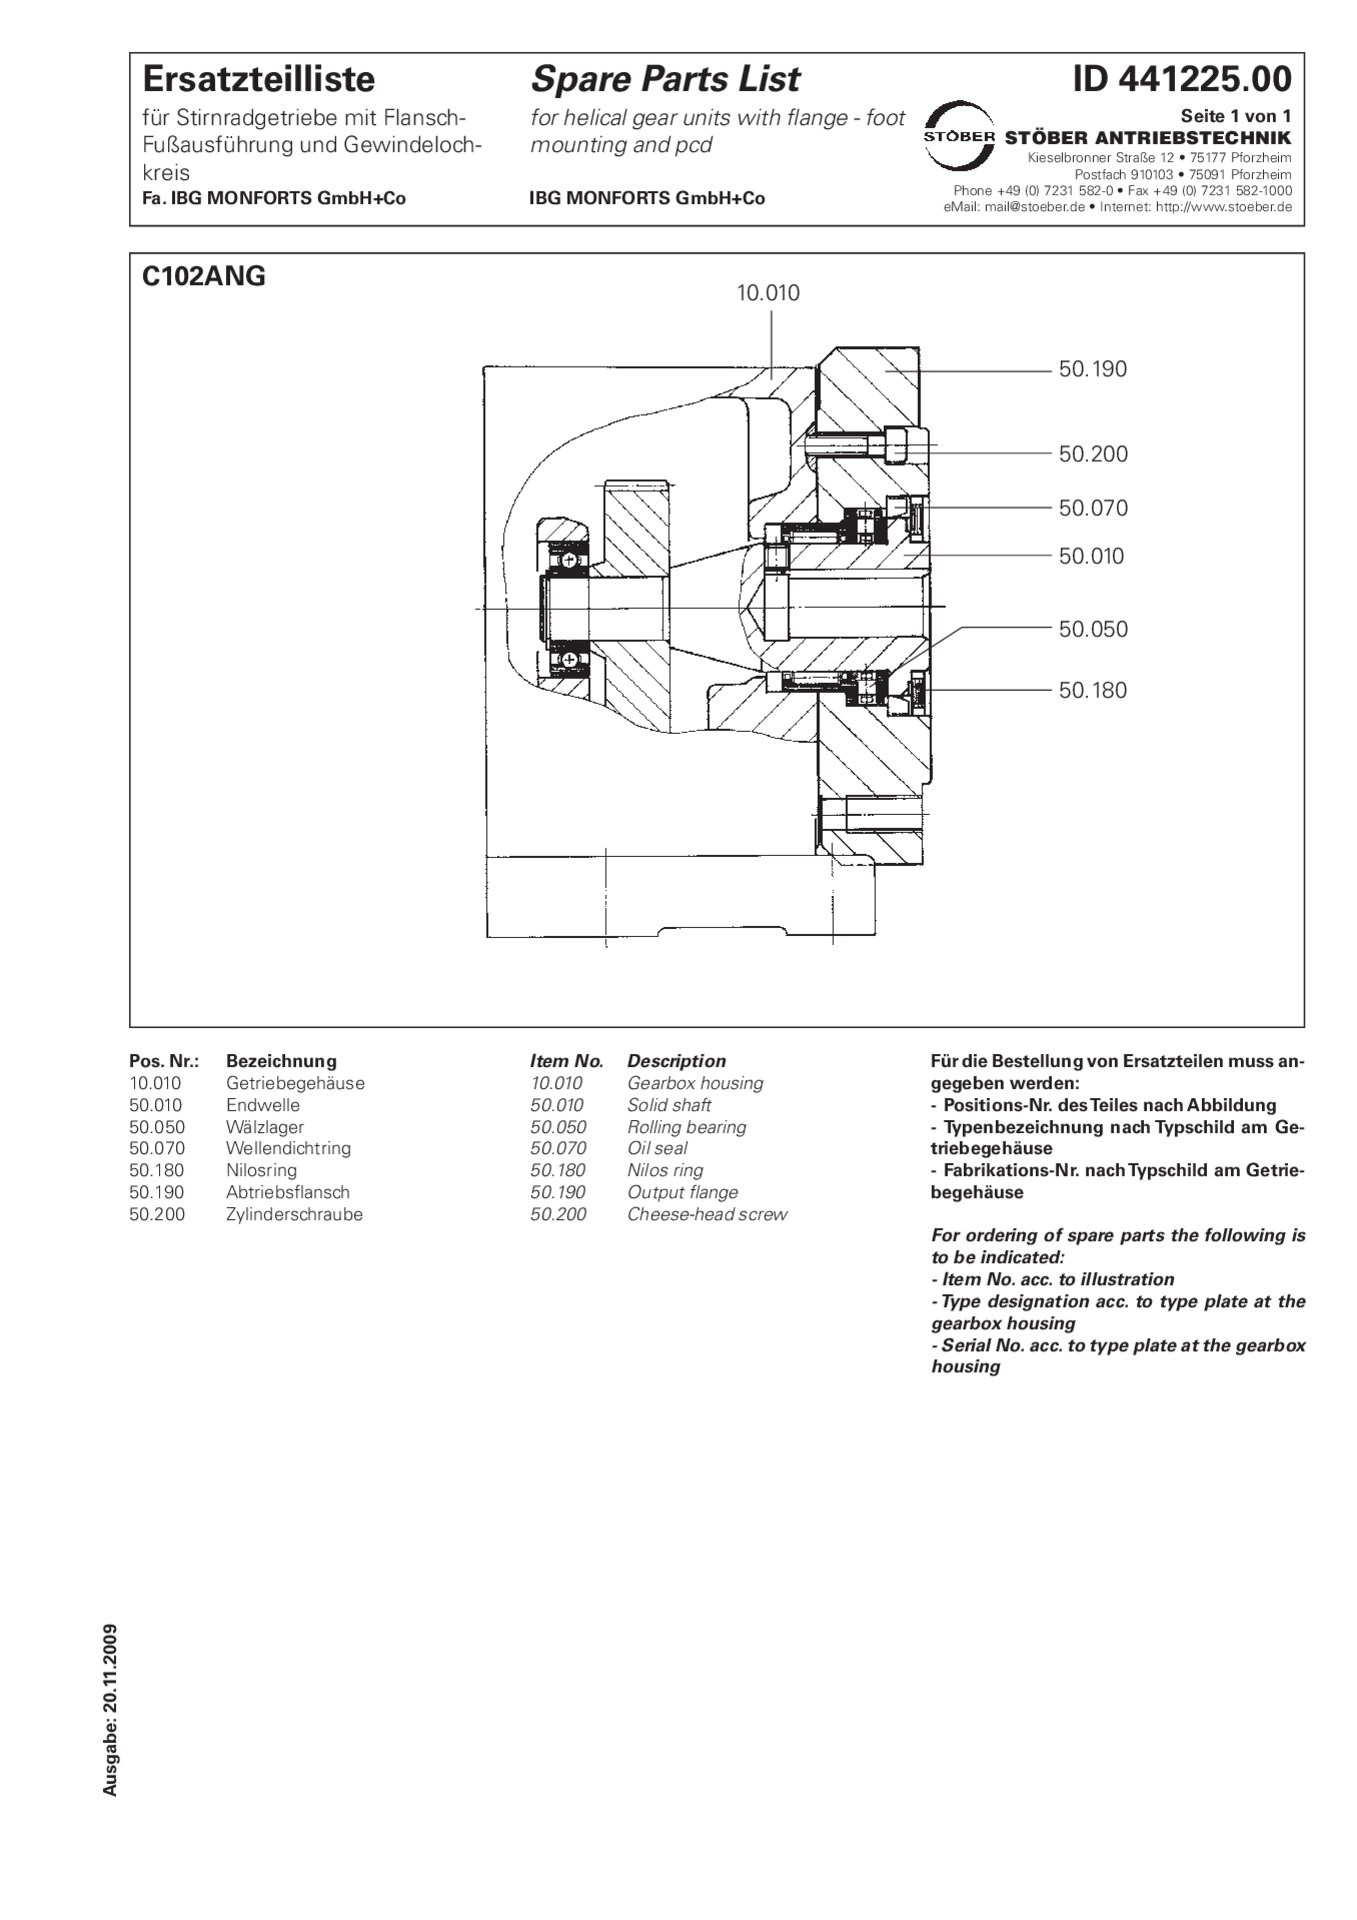 Ersatzteilliste C102 ANG (IBG Monforts GmbH + Co.)Spare parts list C102 ANG (IBG Monforts GmbH + Co.)